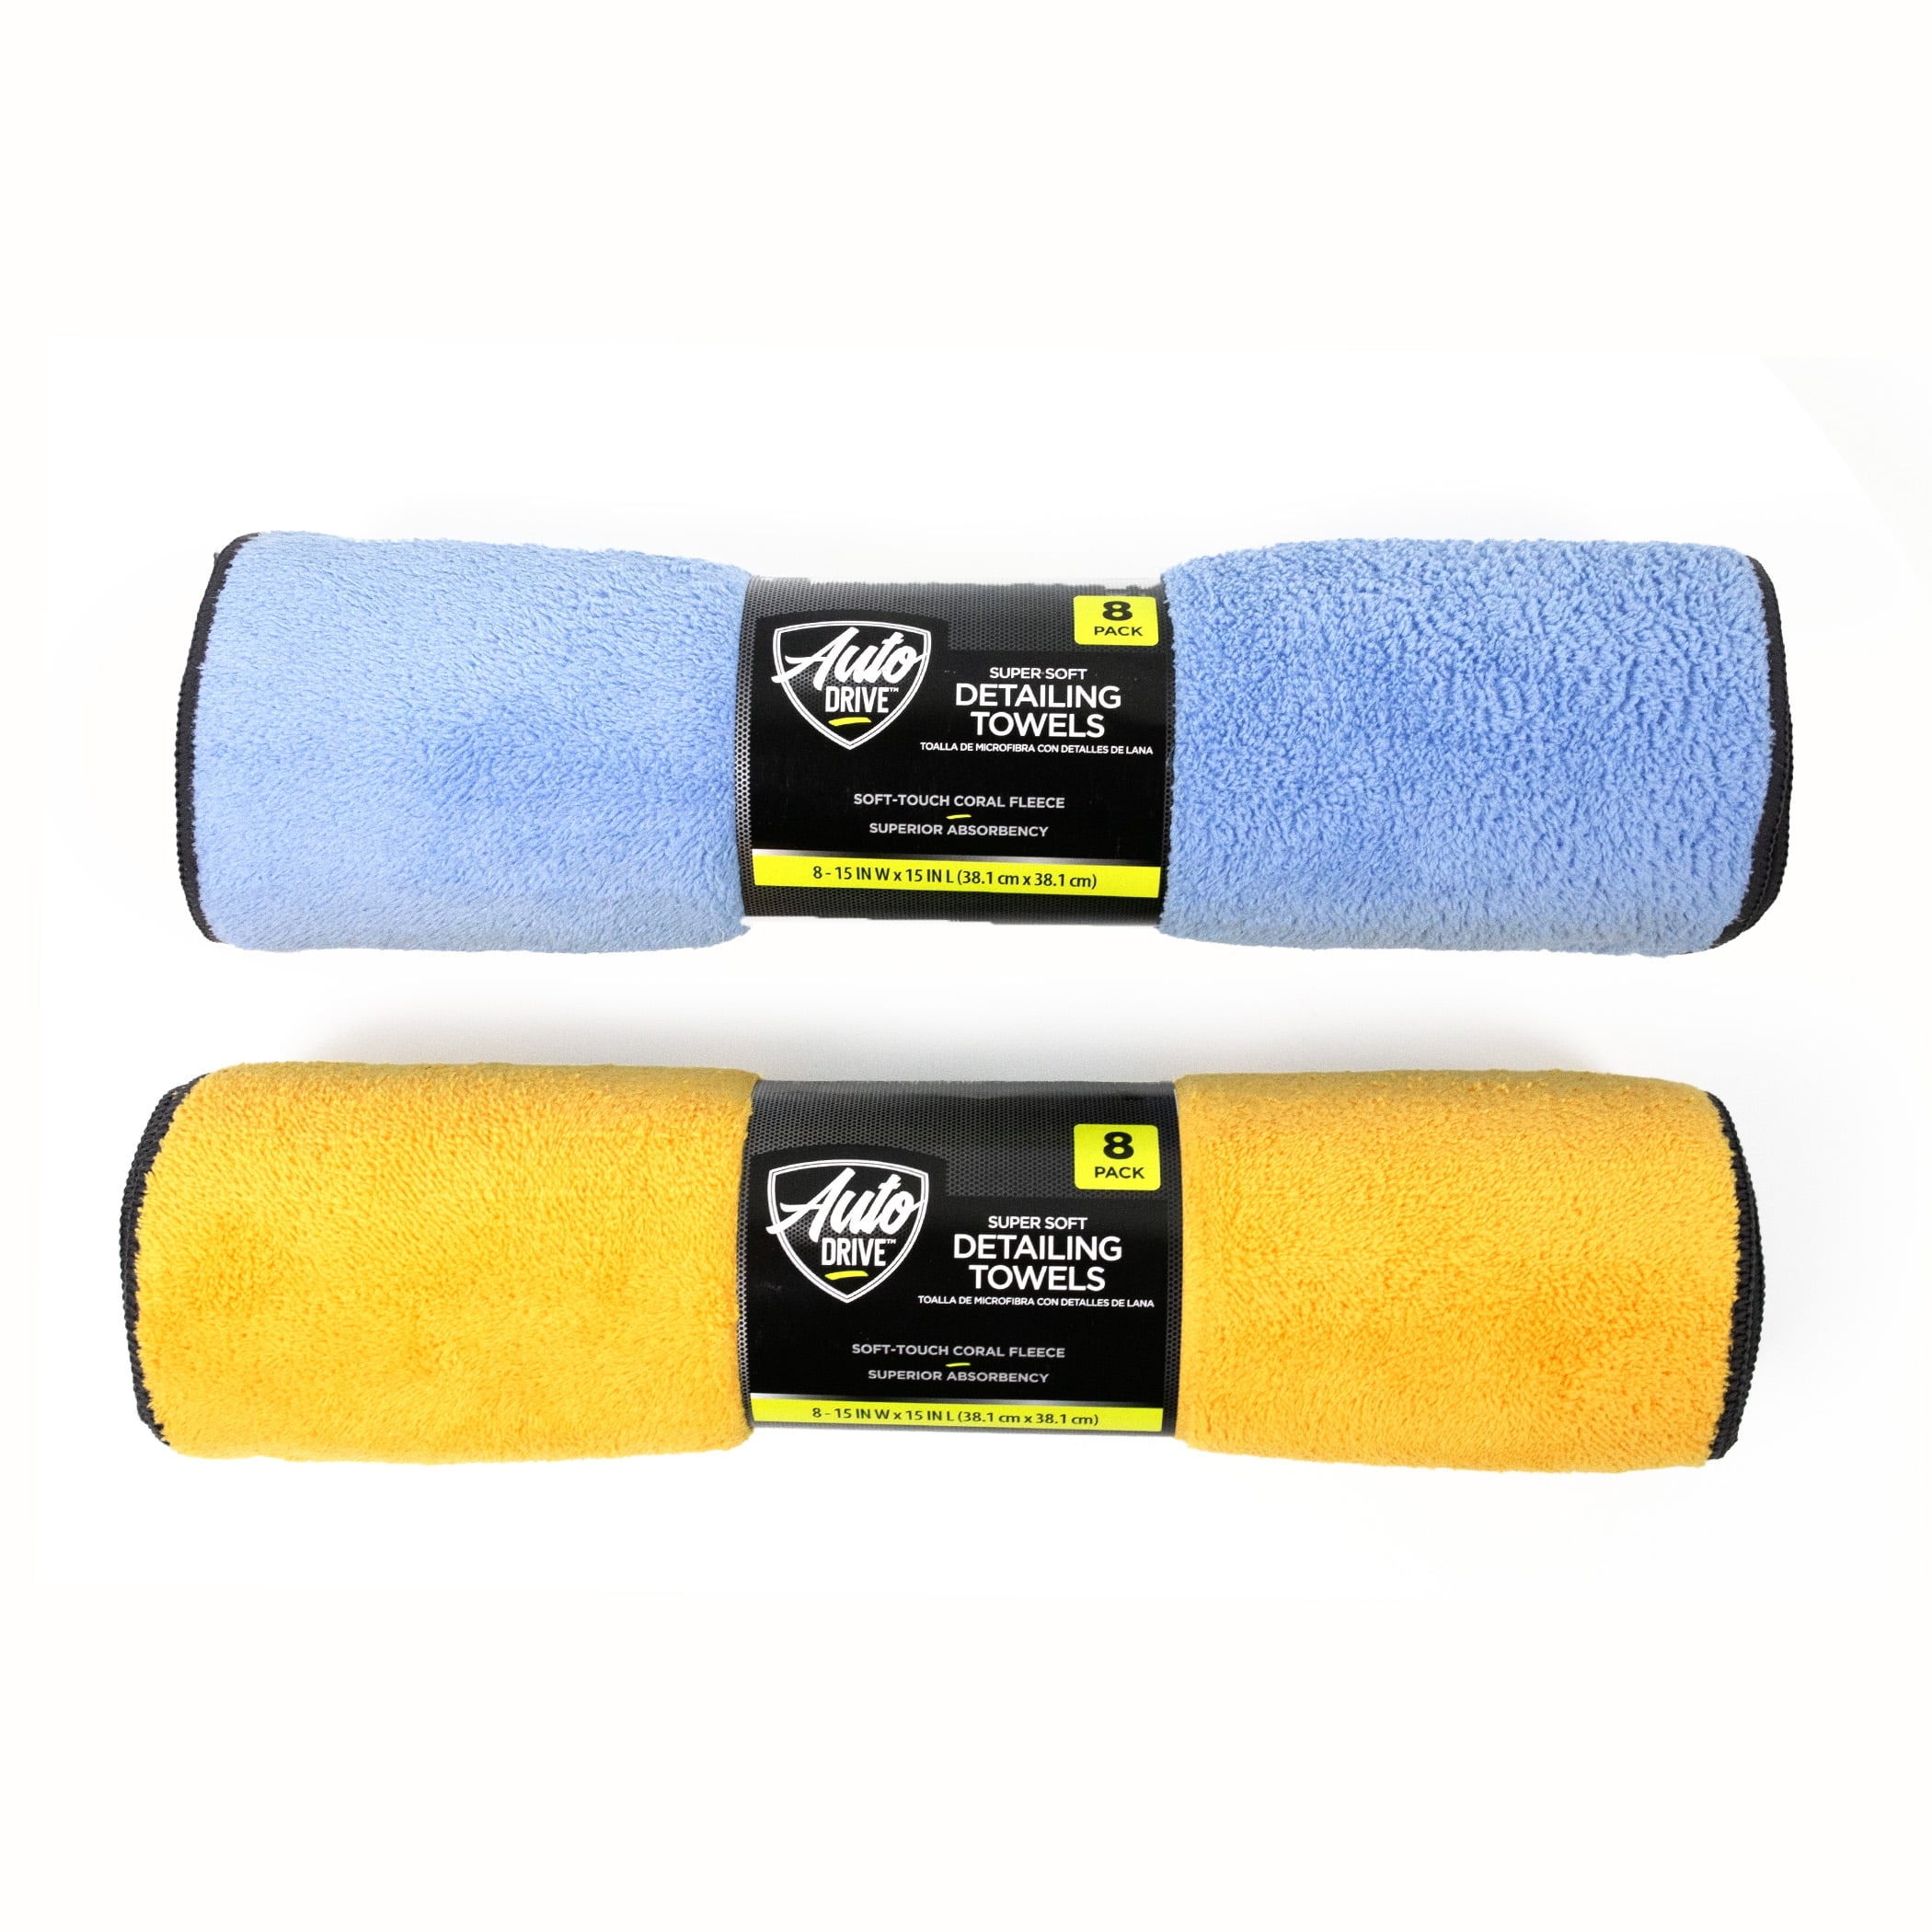 Auto Drive Coral Fleece Multi-Purpose Microfiber Towel, Cleaning, Detailing, 8pk, Blue & Yellow